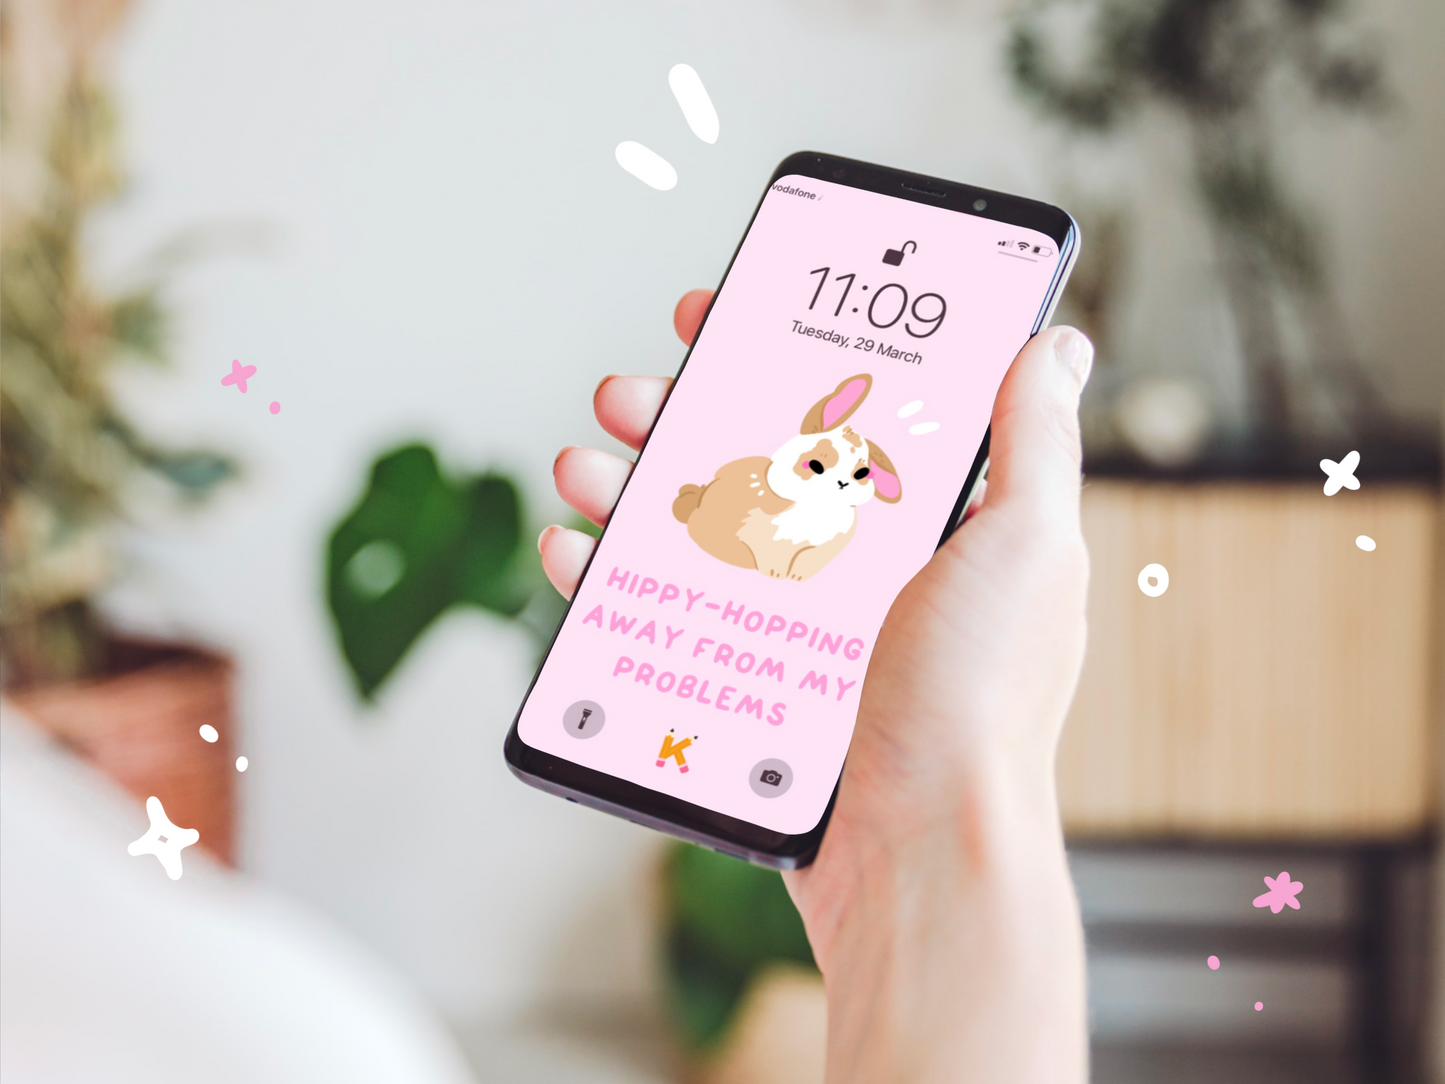 Bunny Phone Wallpaper Duo | Digital Downloads